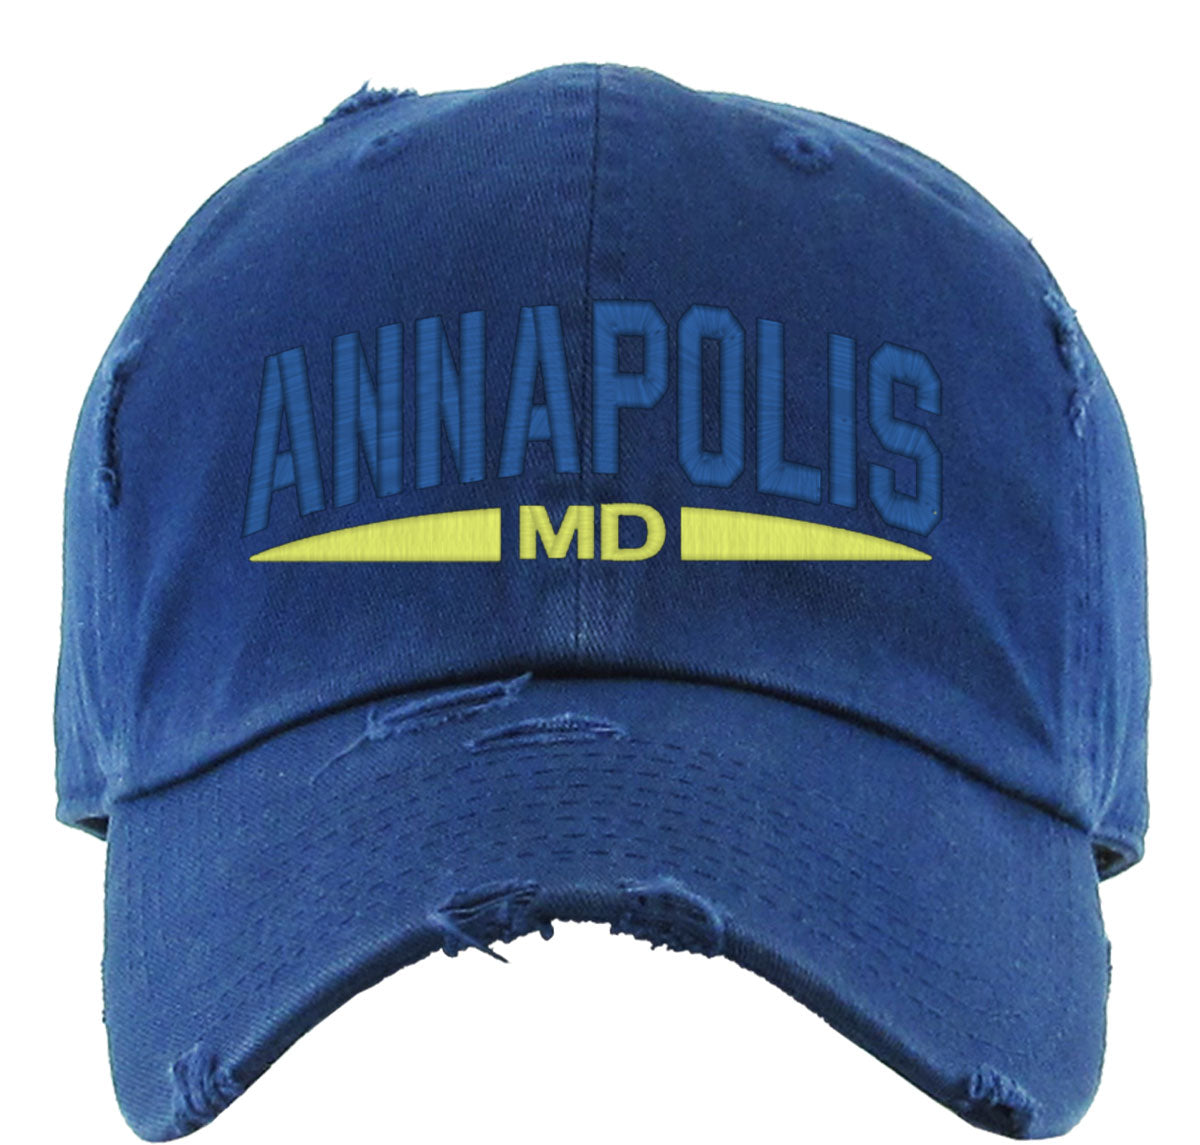 Annapolis Maryland Vintage Baseball Cap